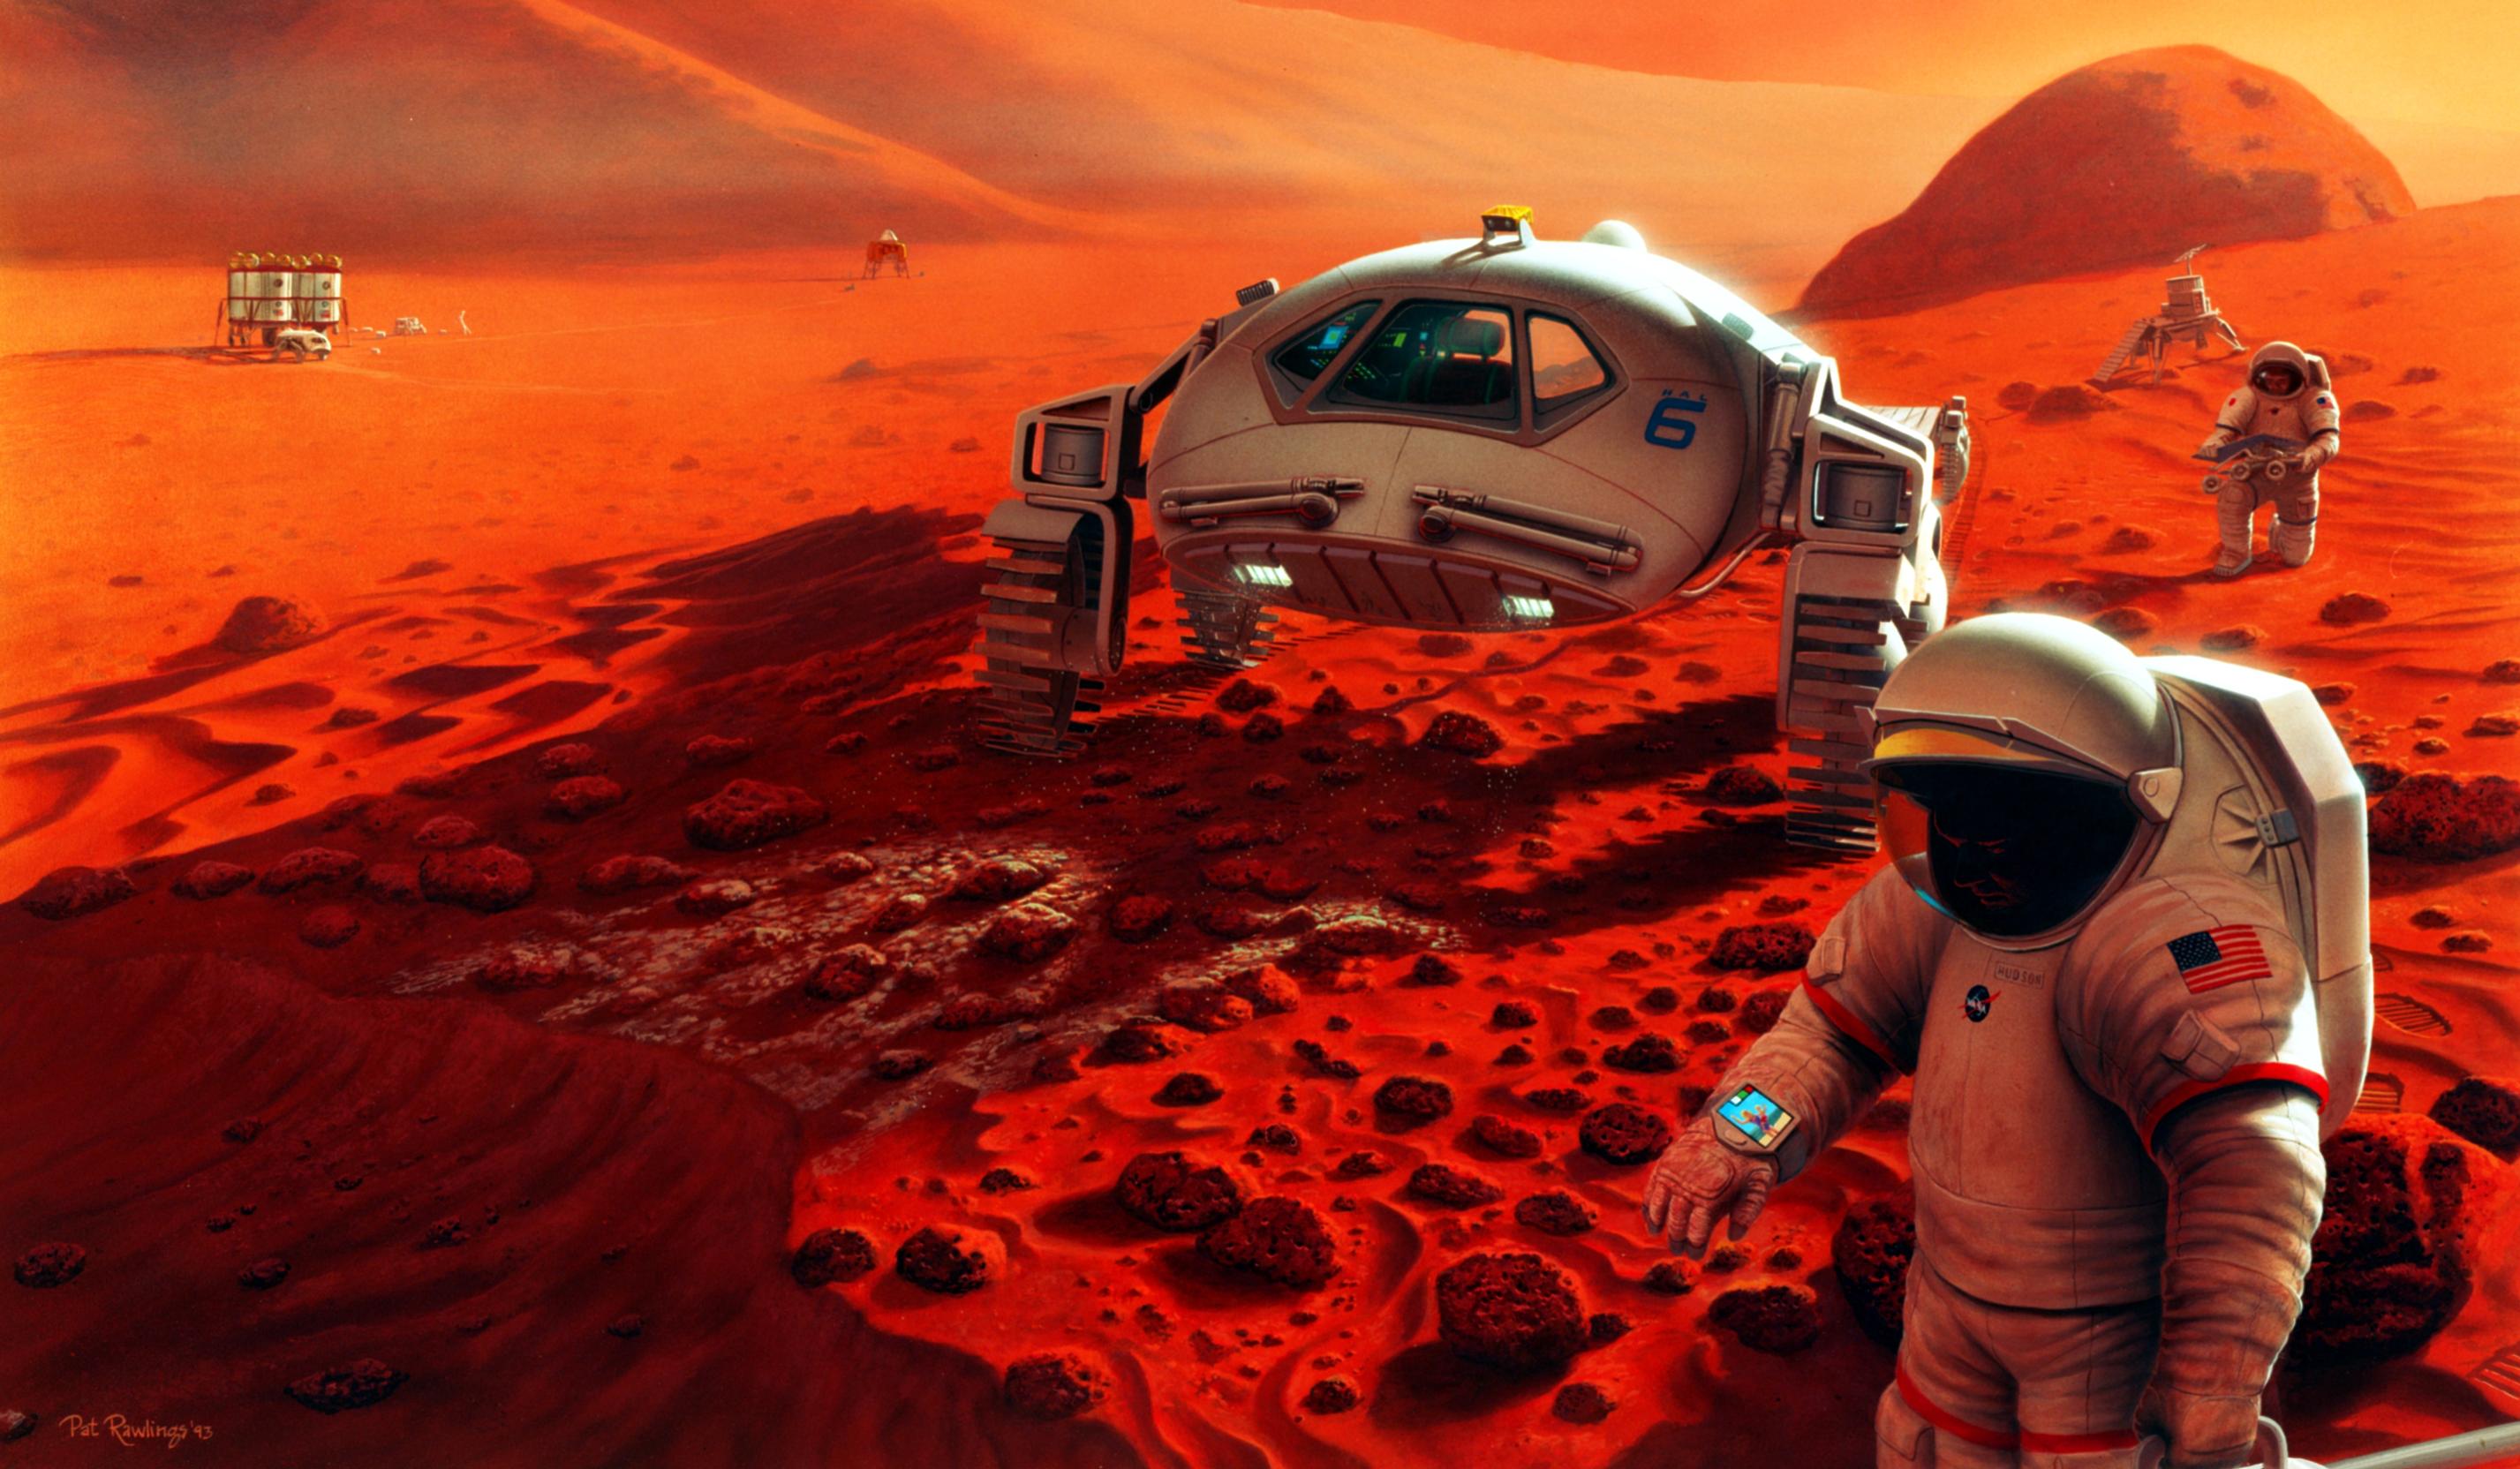 future human travel to mars